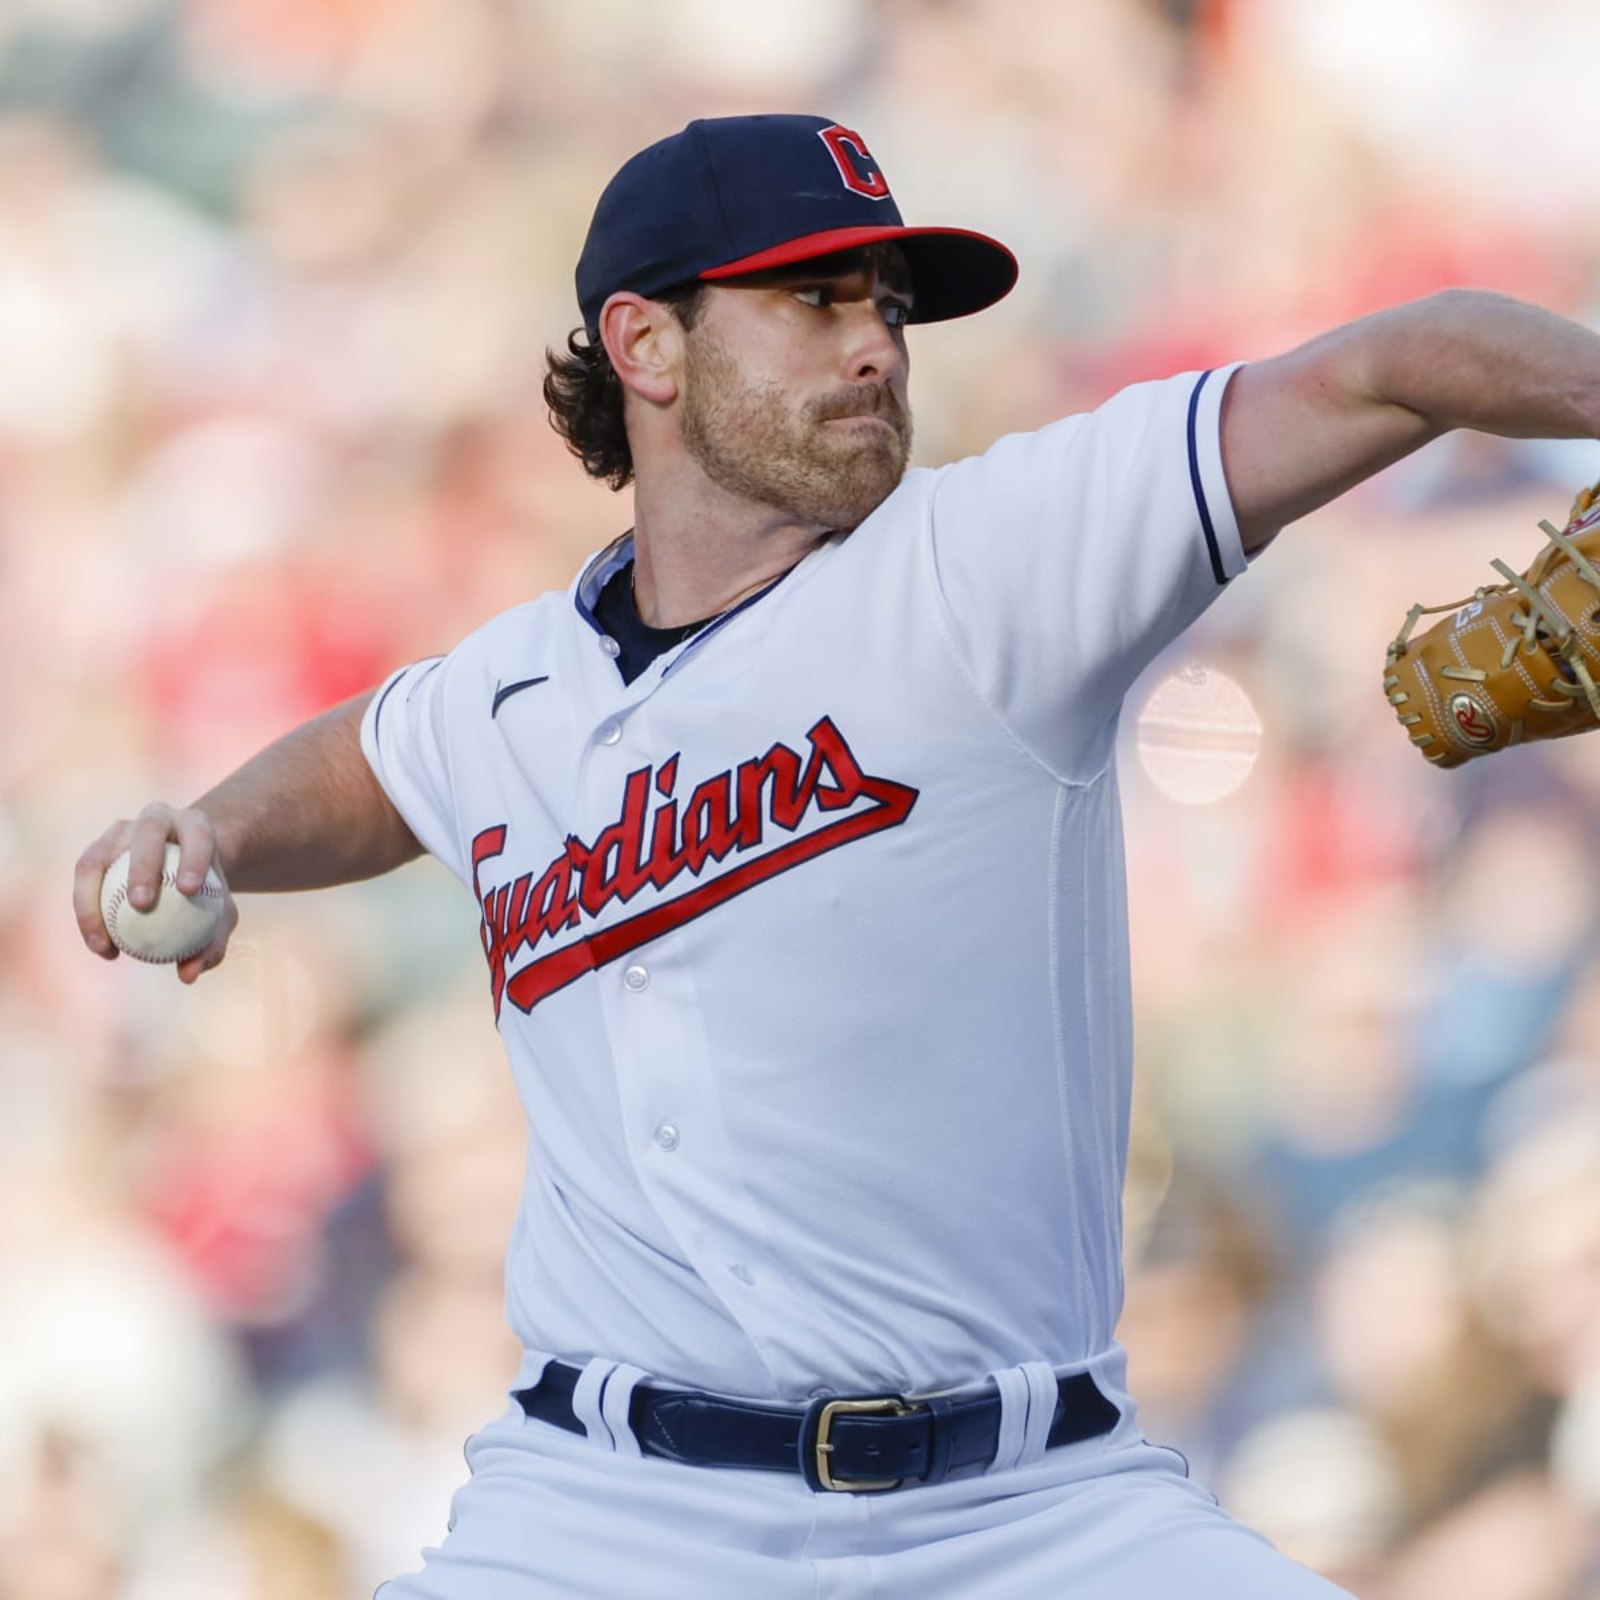 Braves Rumors: Tigers trade target, Kyle Wright's injury, rotation help